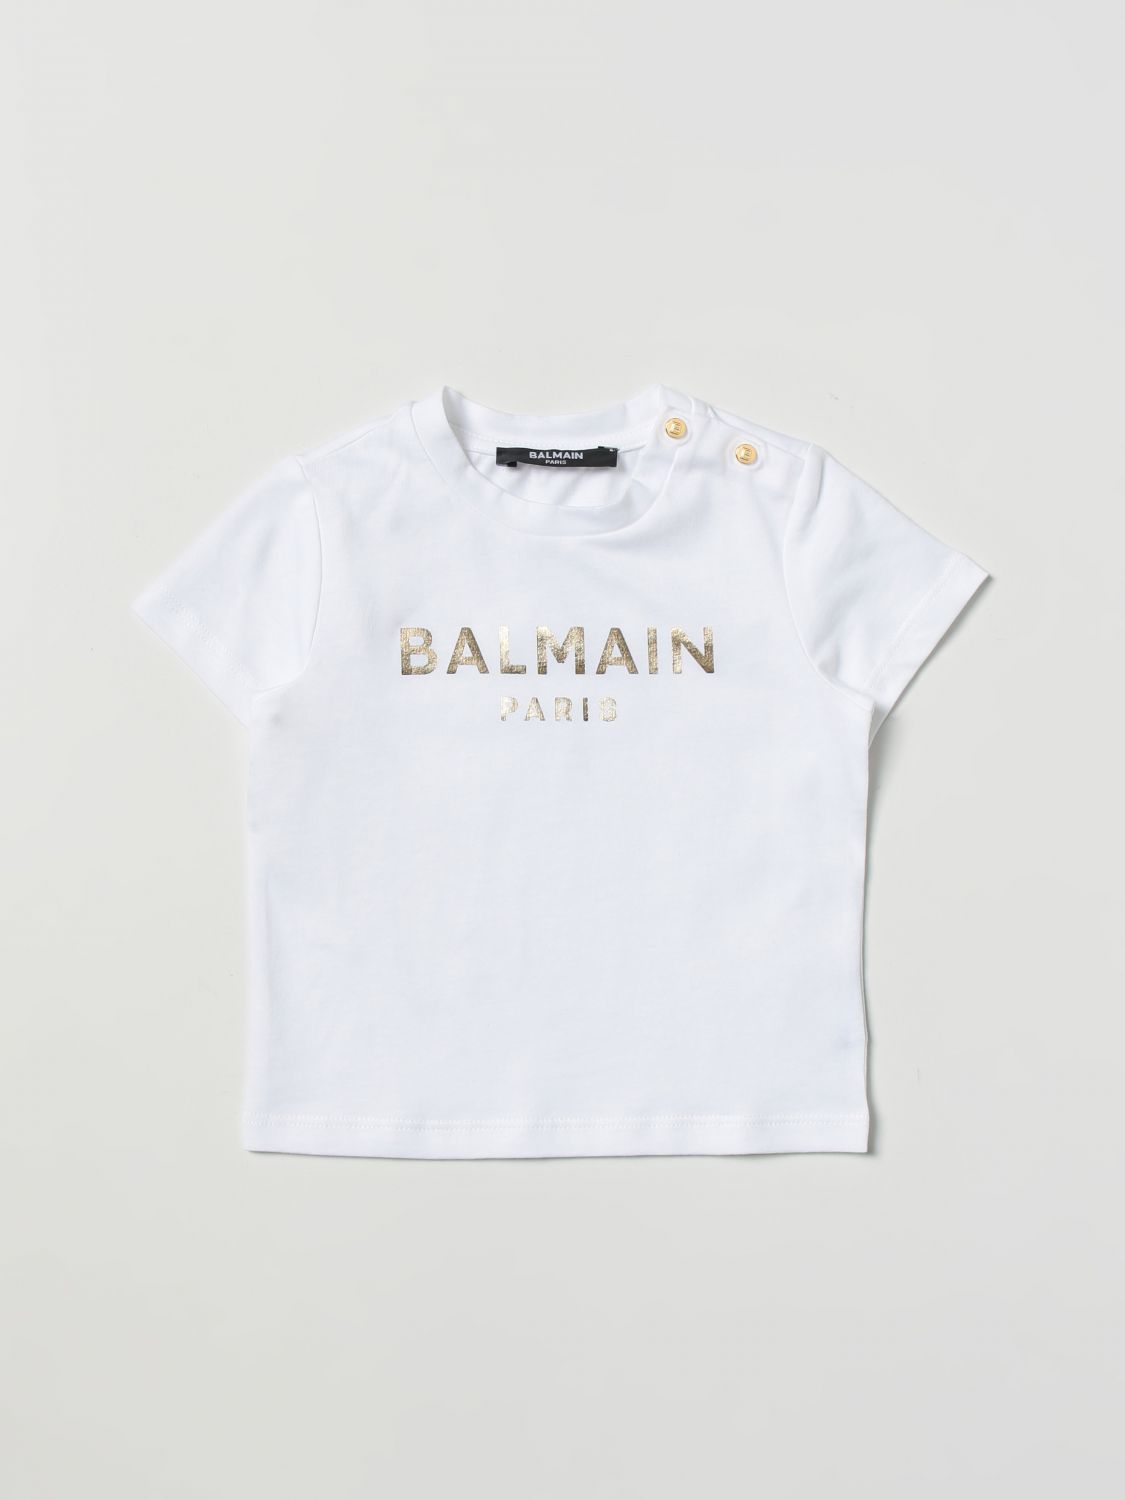 Balmain Babies' T-shirt  Kids Kids Color White